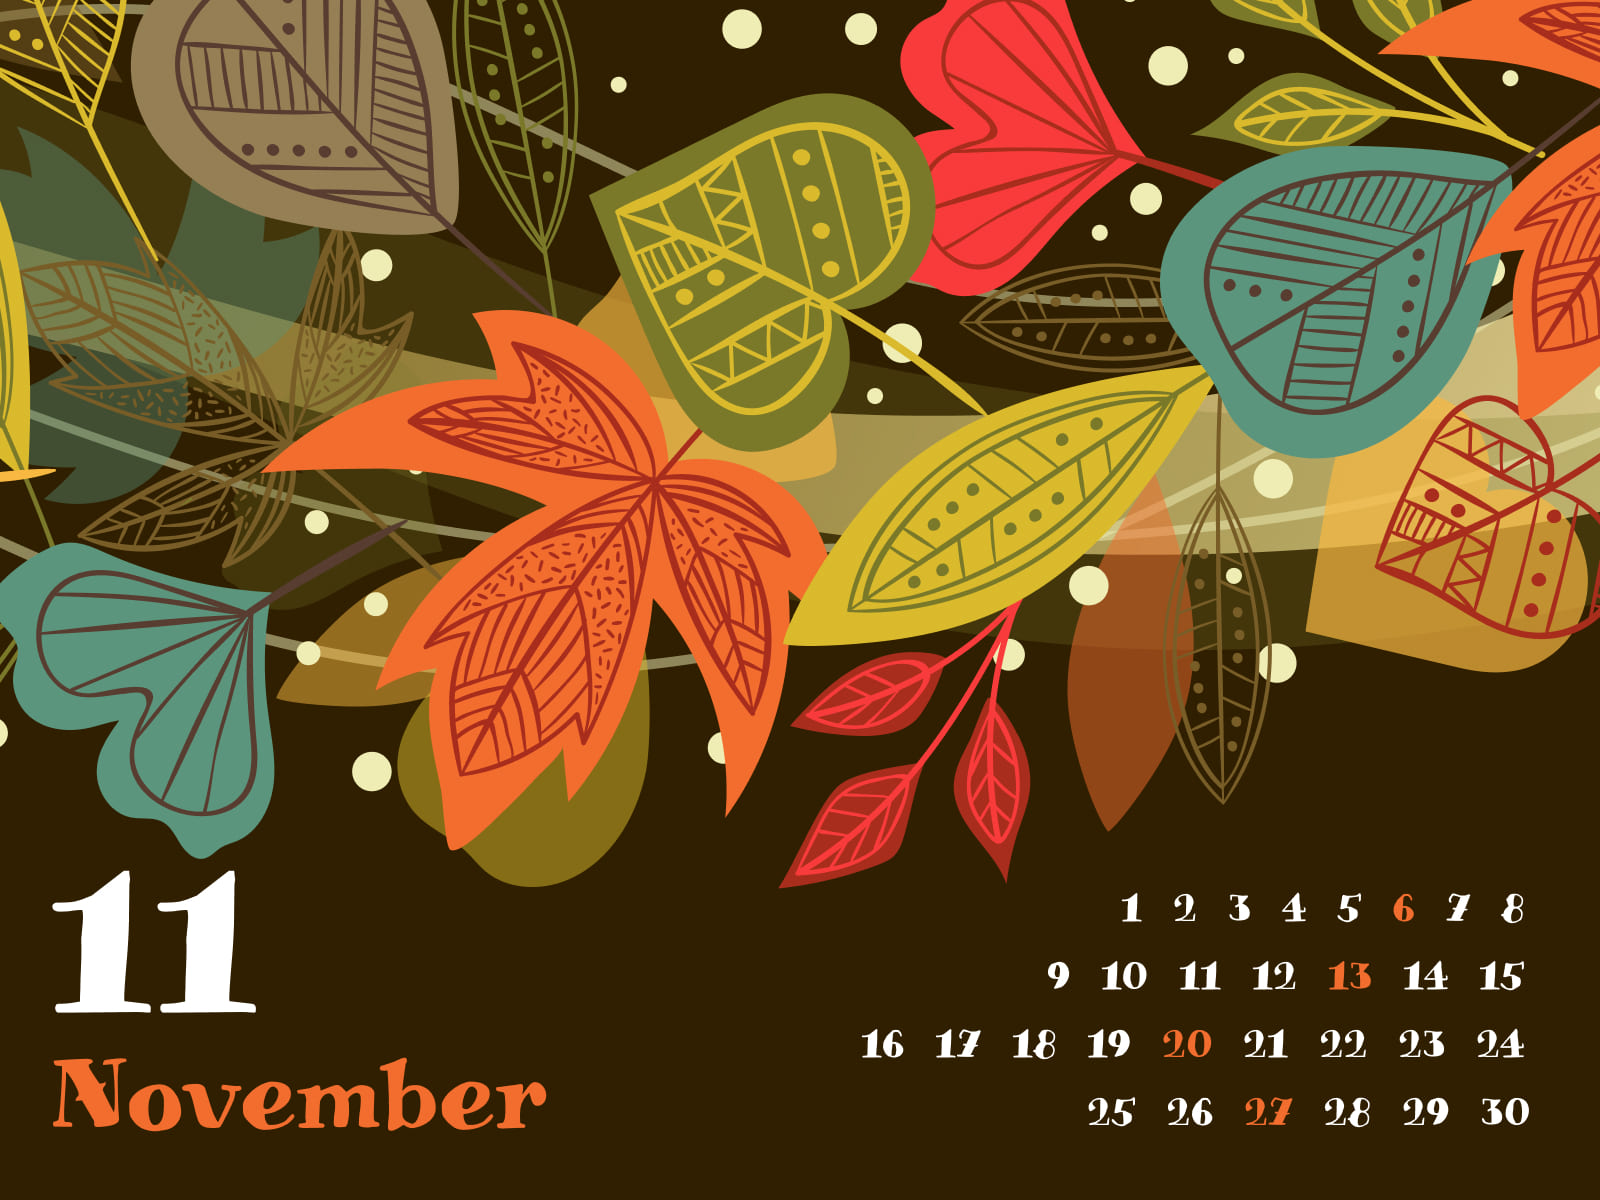 November calendar page in brown color.